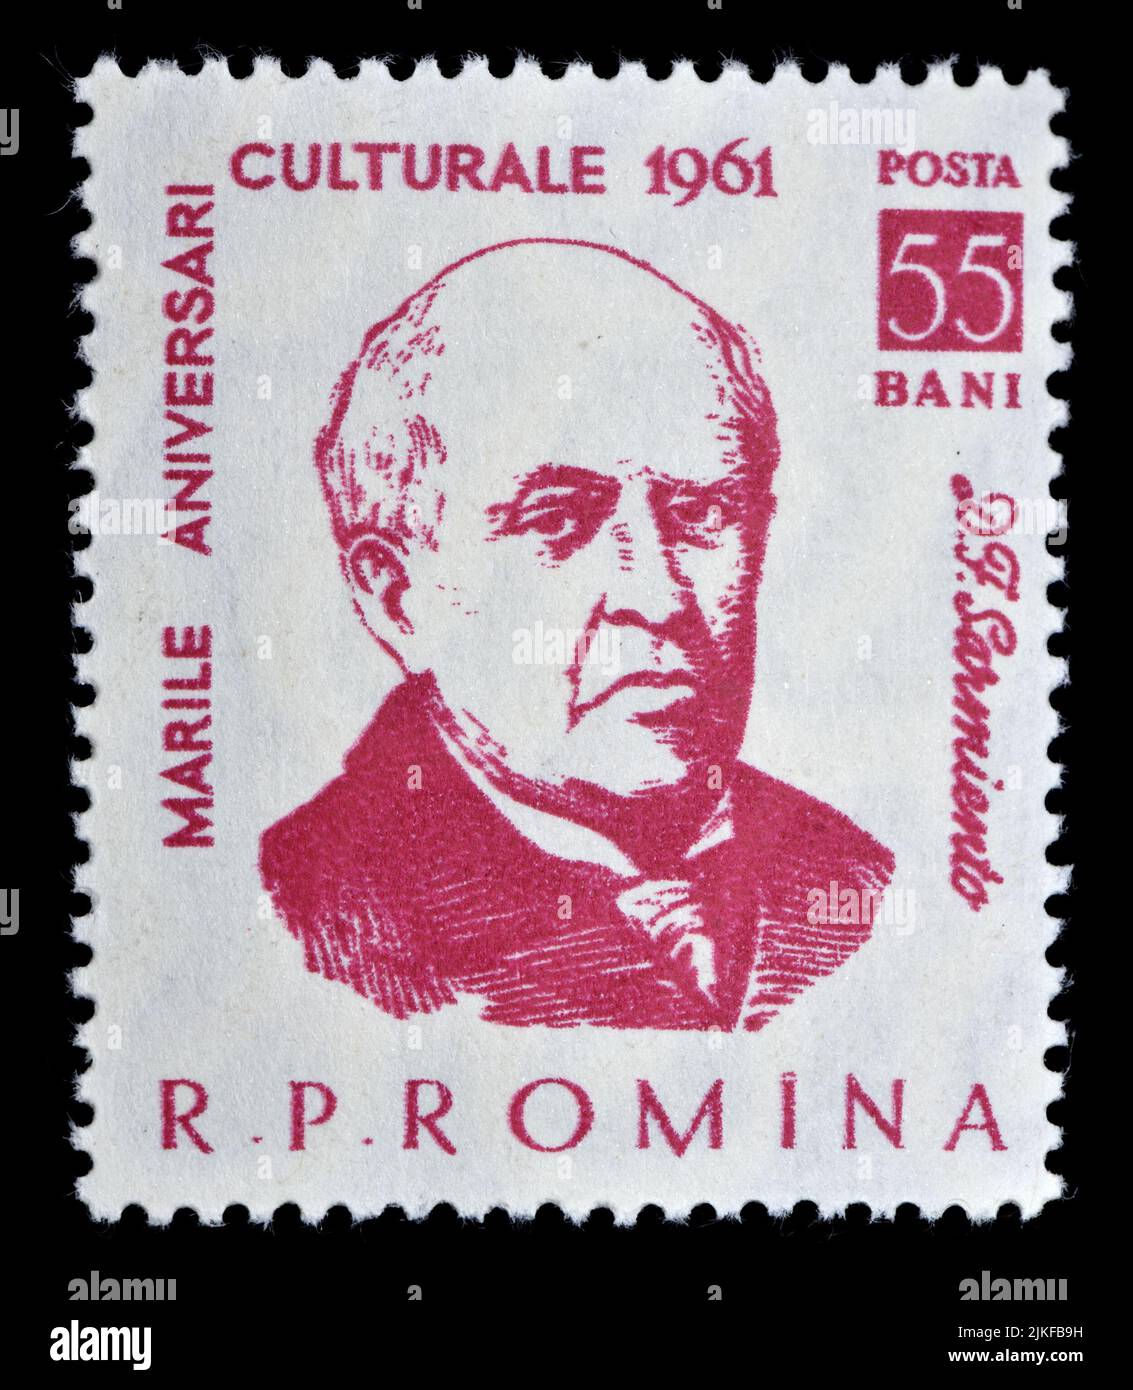 Romanian postage stamp (1961) : Domingo Sarmiento (1811-1888), Argentinian Writer Stock Photo